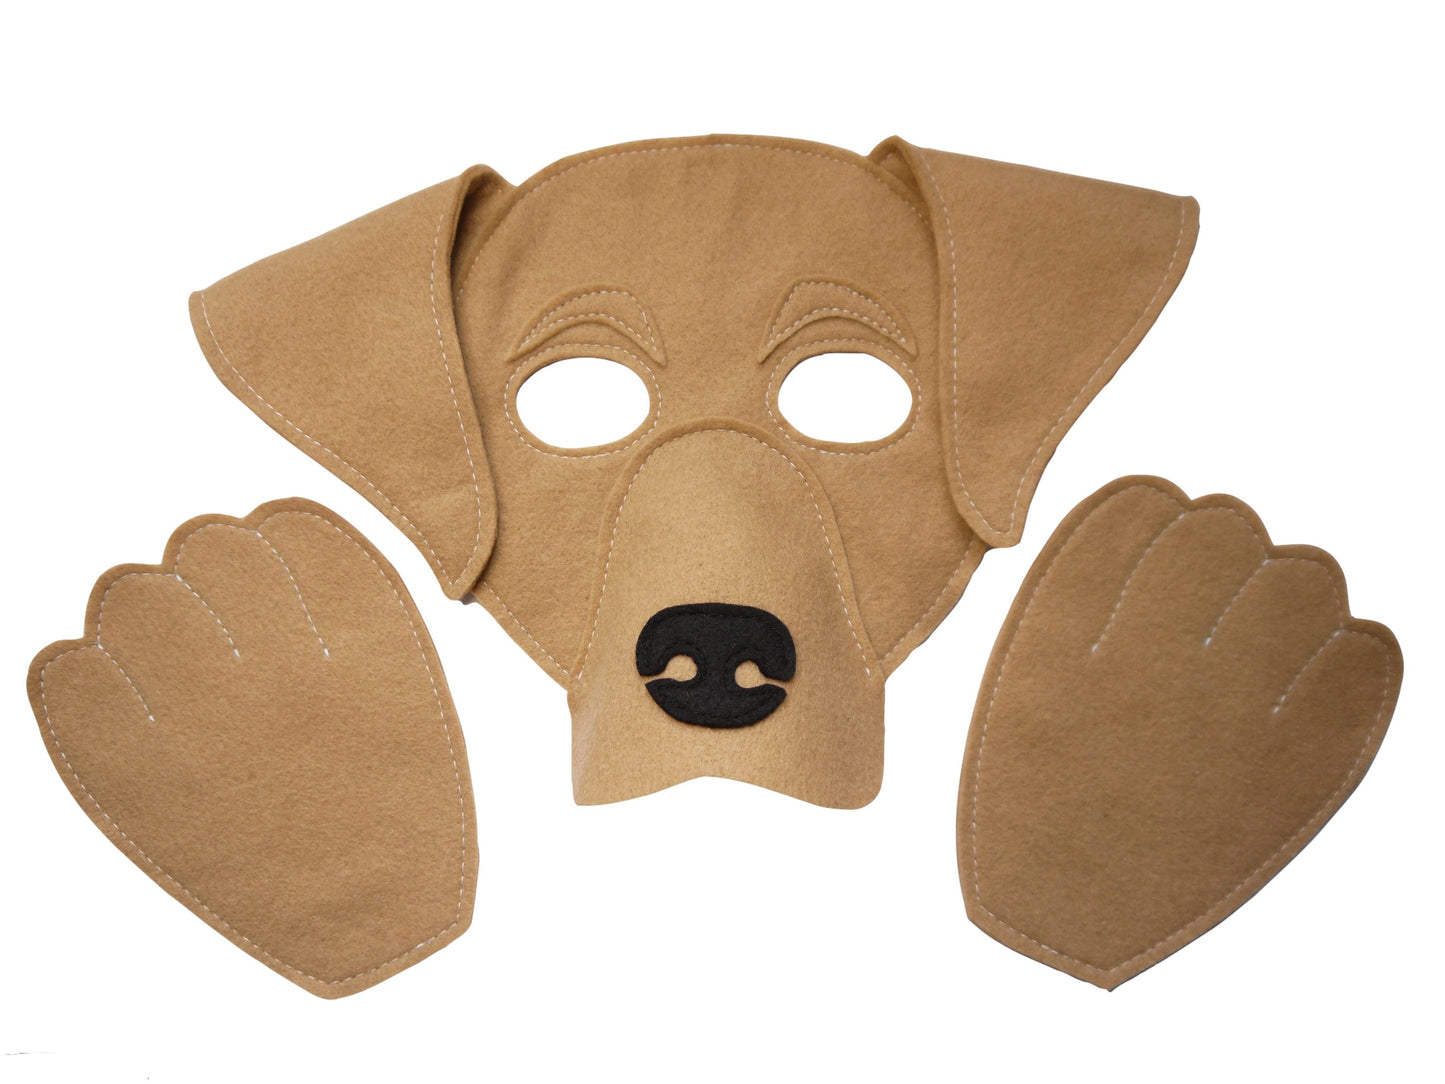 Labrador Dog onesie costume